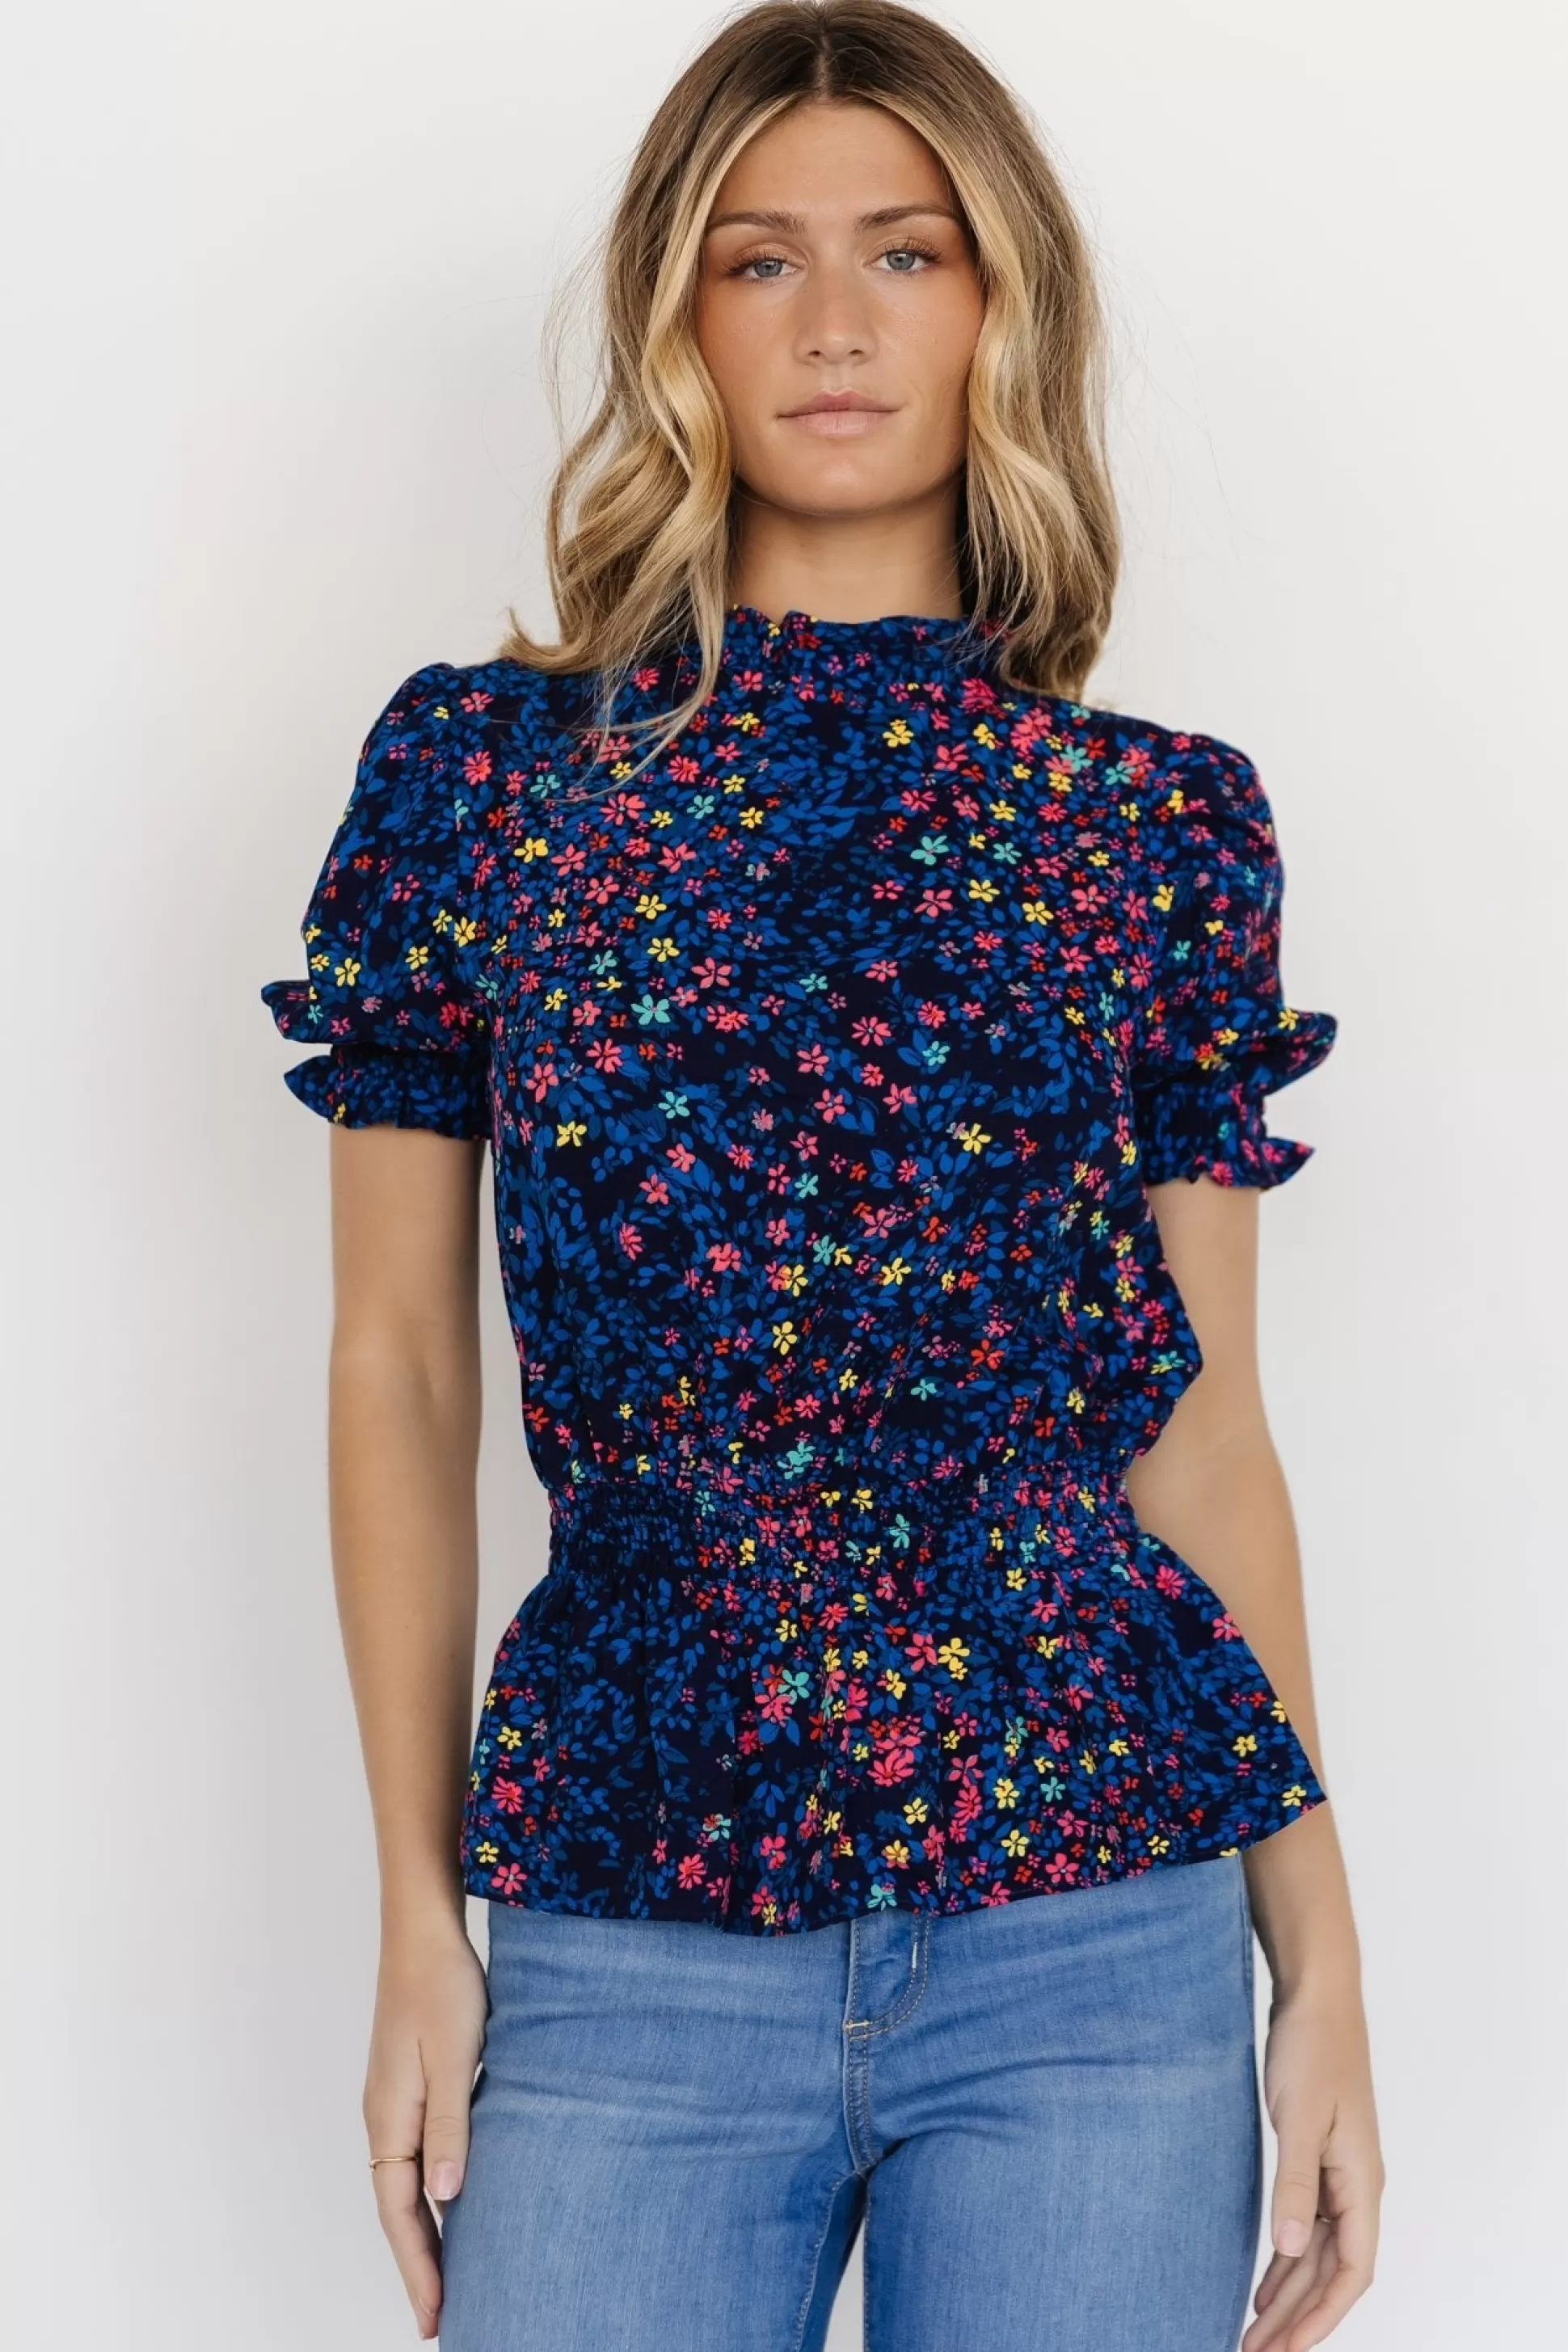 blouses + shirts | Baltic Born Beth Peplum Top | Blue Multi